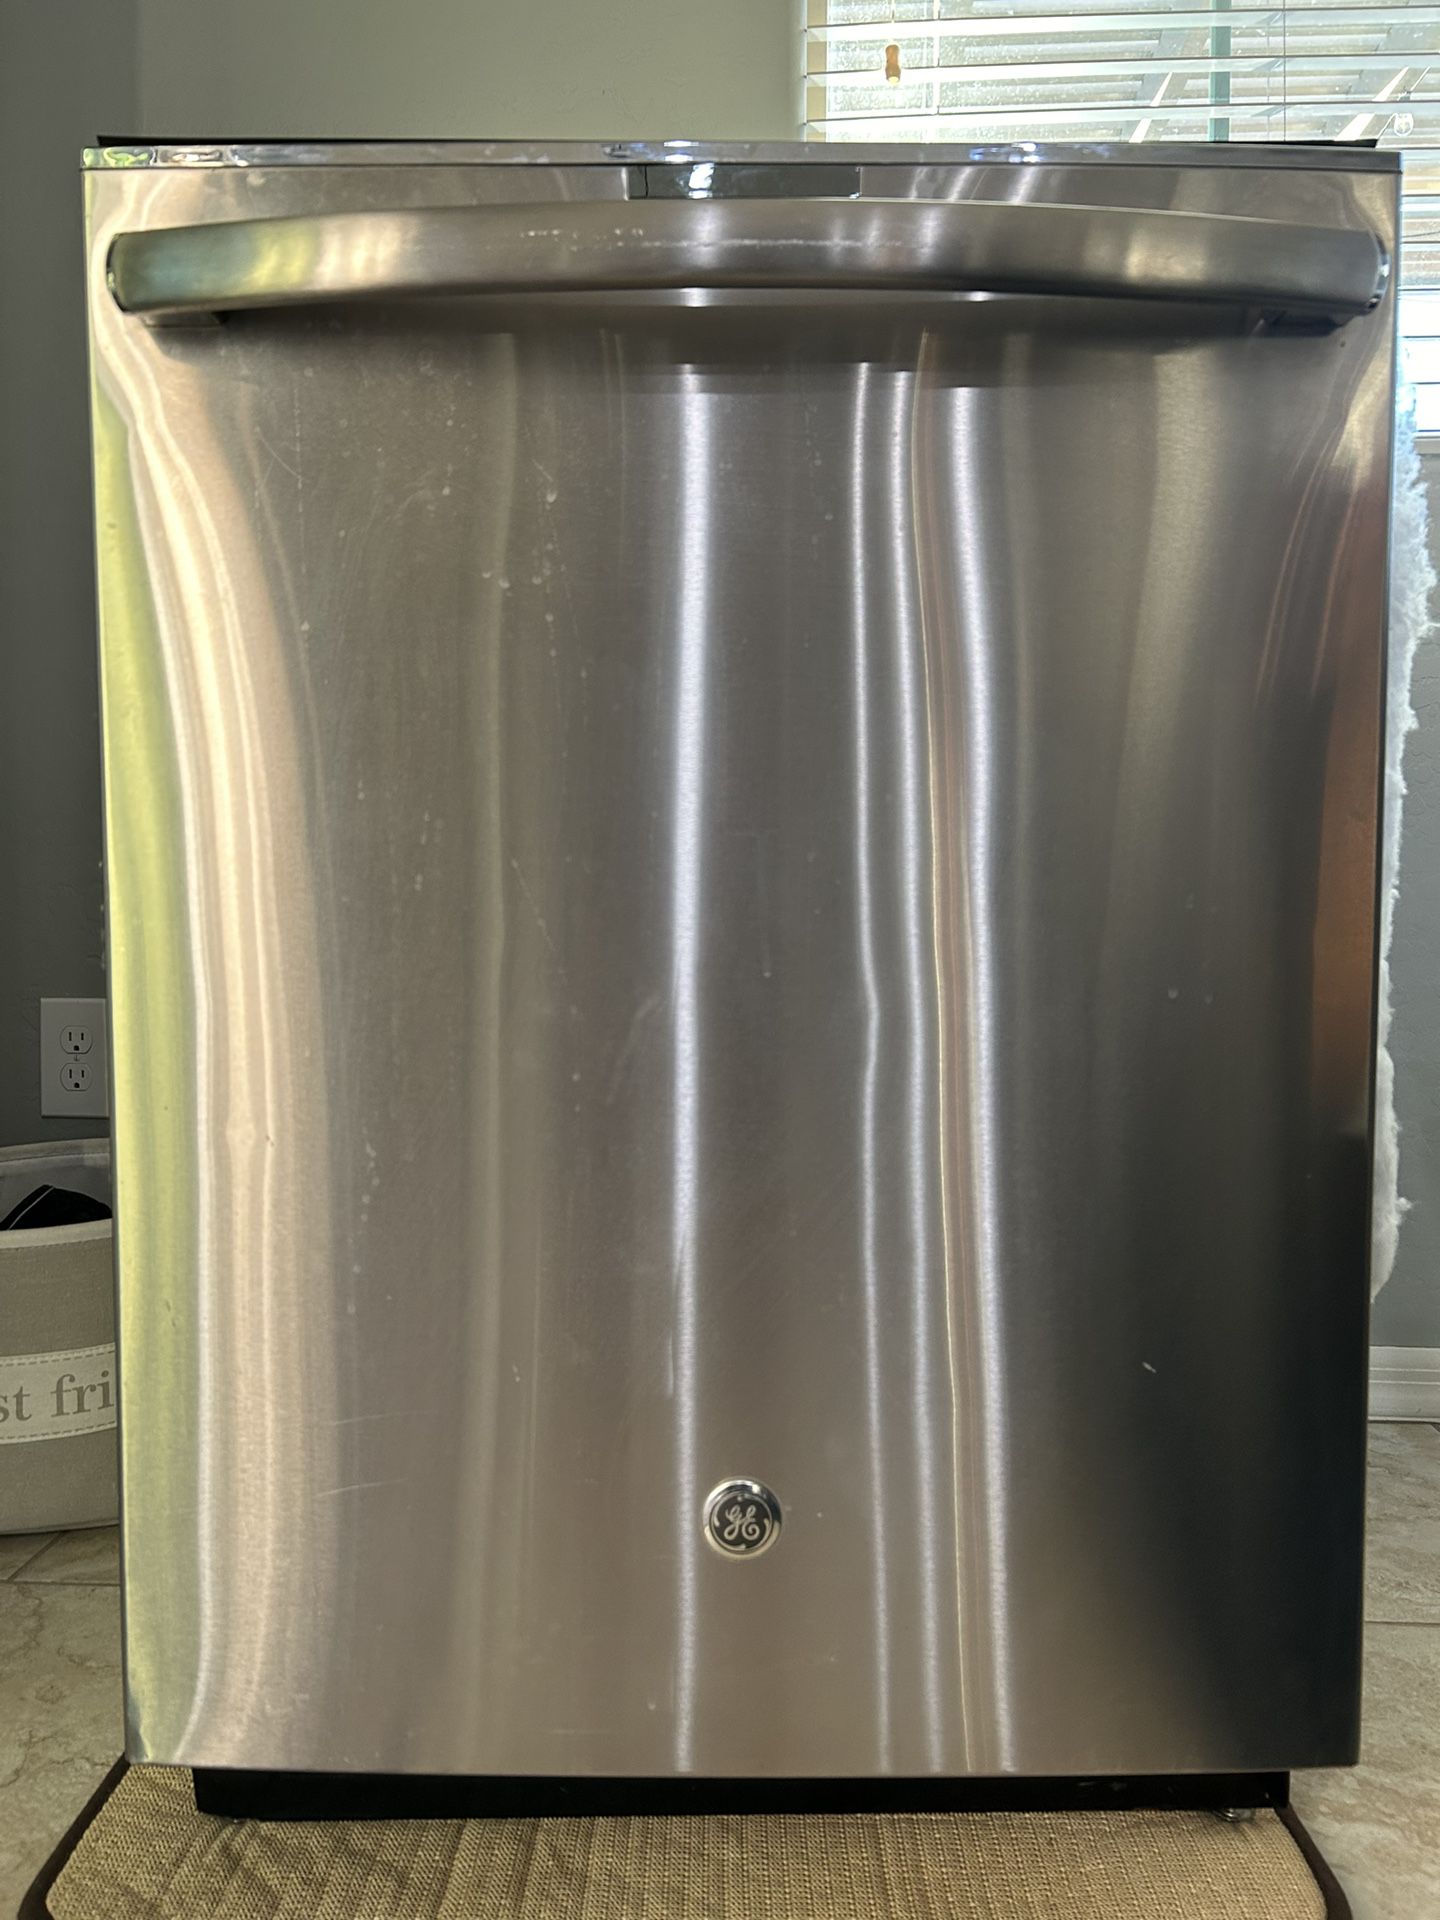 GE Profile Dishwasher - Not Fully Functional 